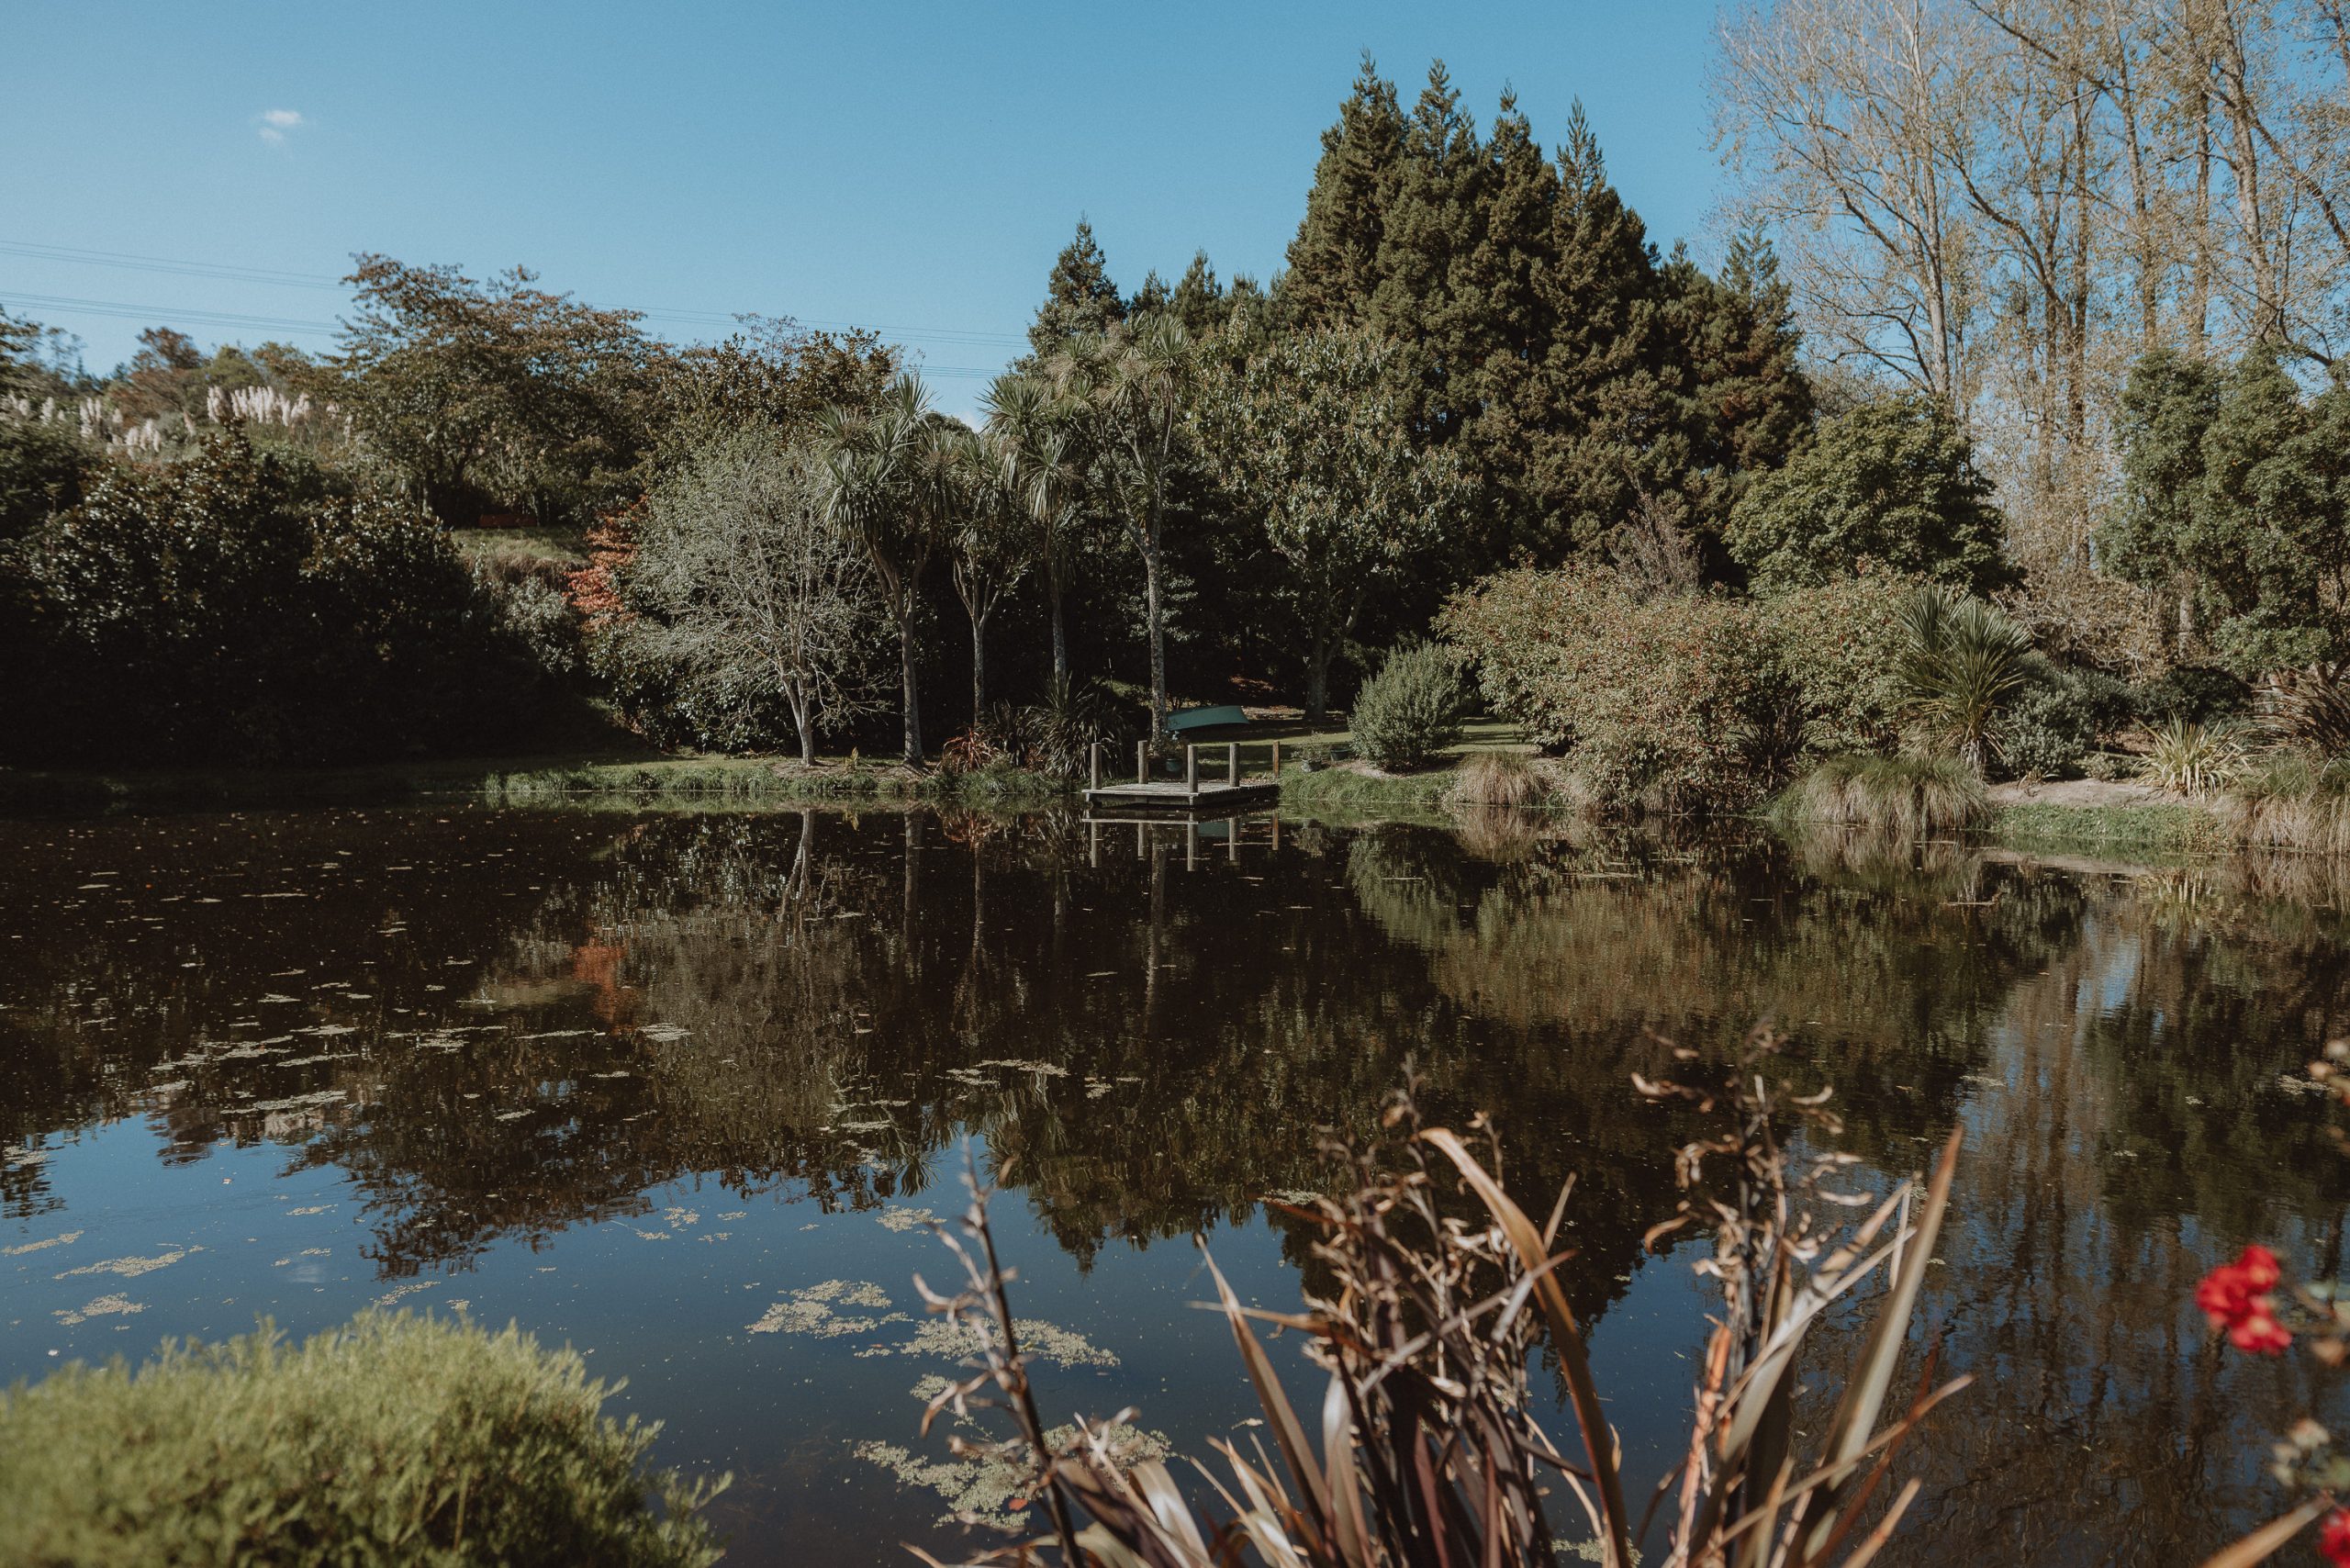 Palmerston North wedding venues with this lake view at Roseburn Park